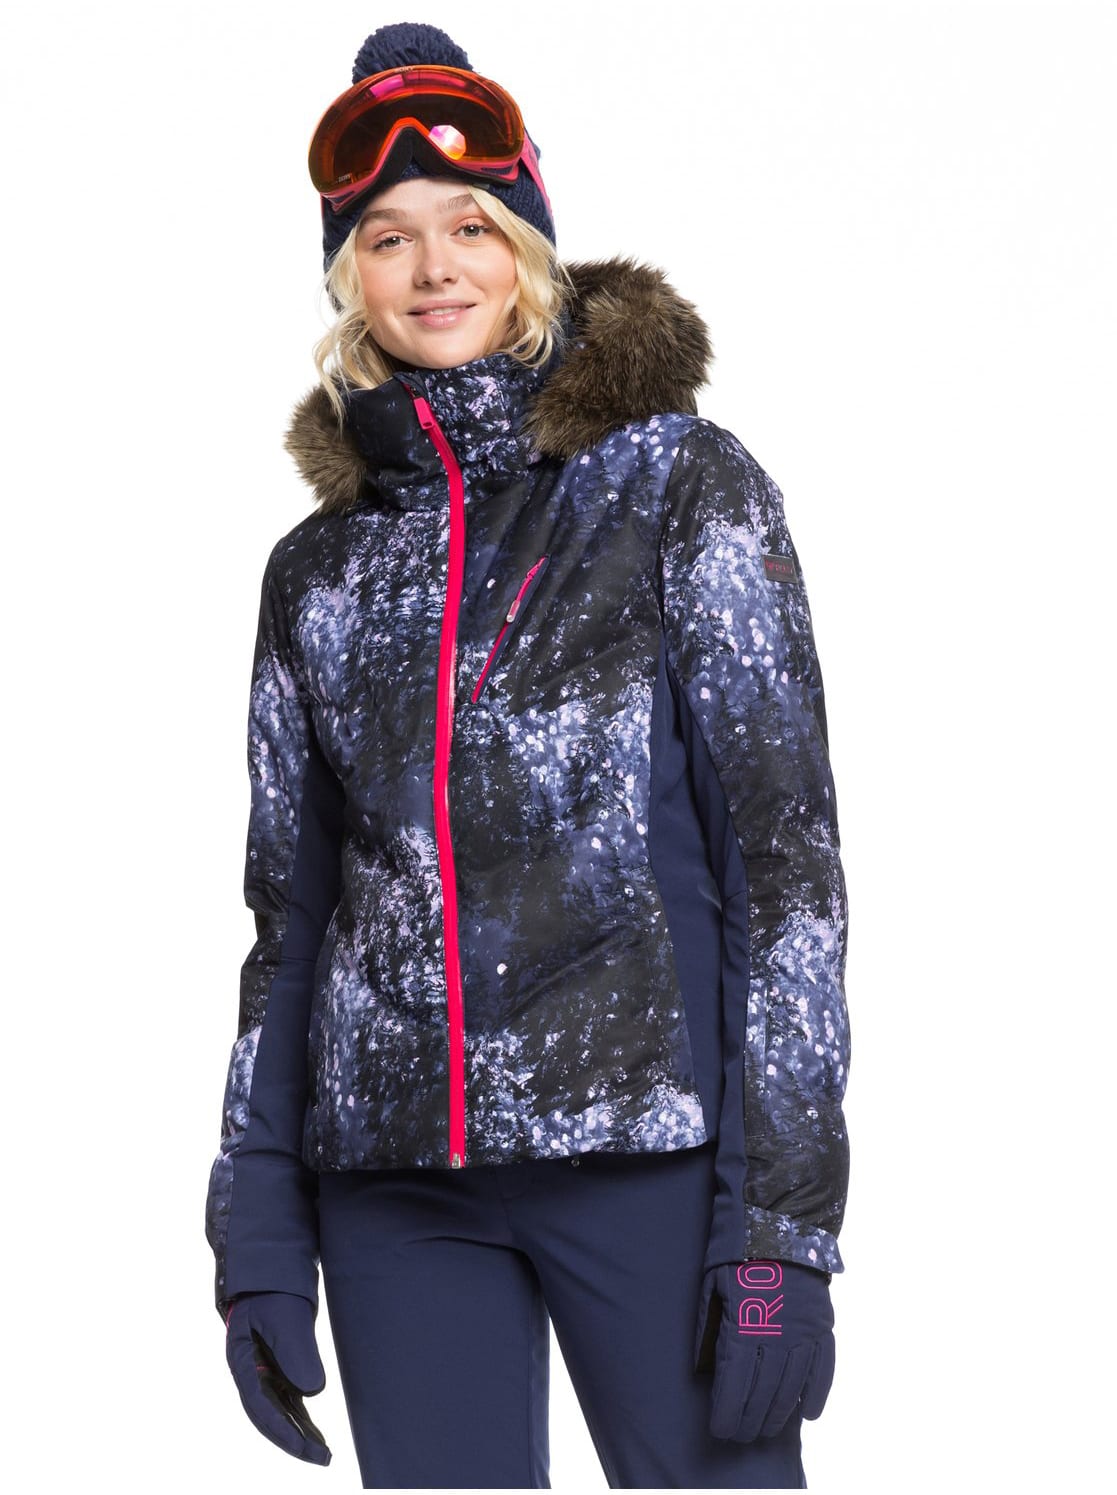 Jacket at sale Sale Roxy glamor | hot model Snowstorm Womens Snowboard Hot Plus